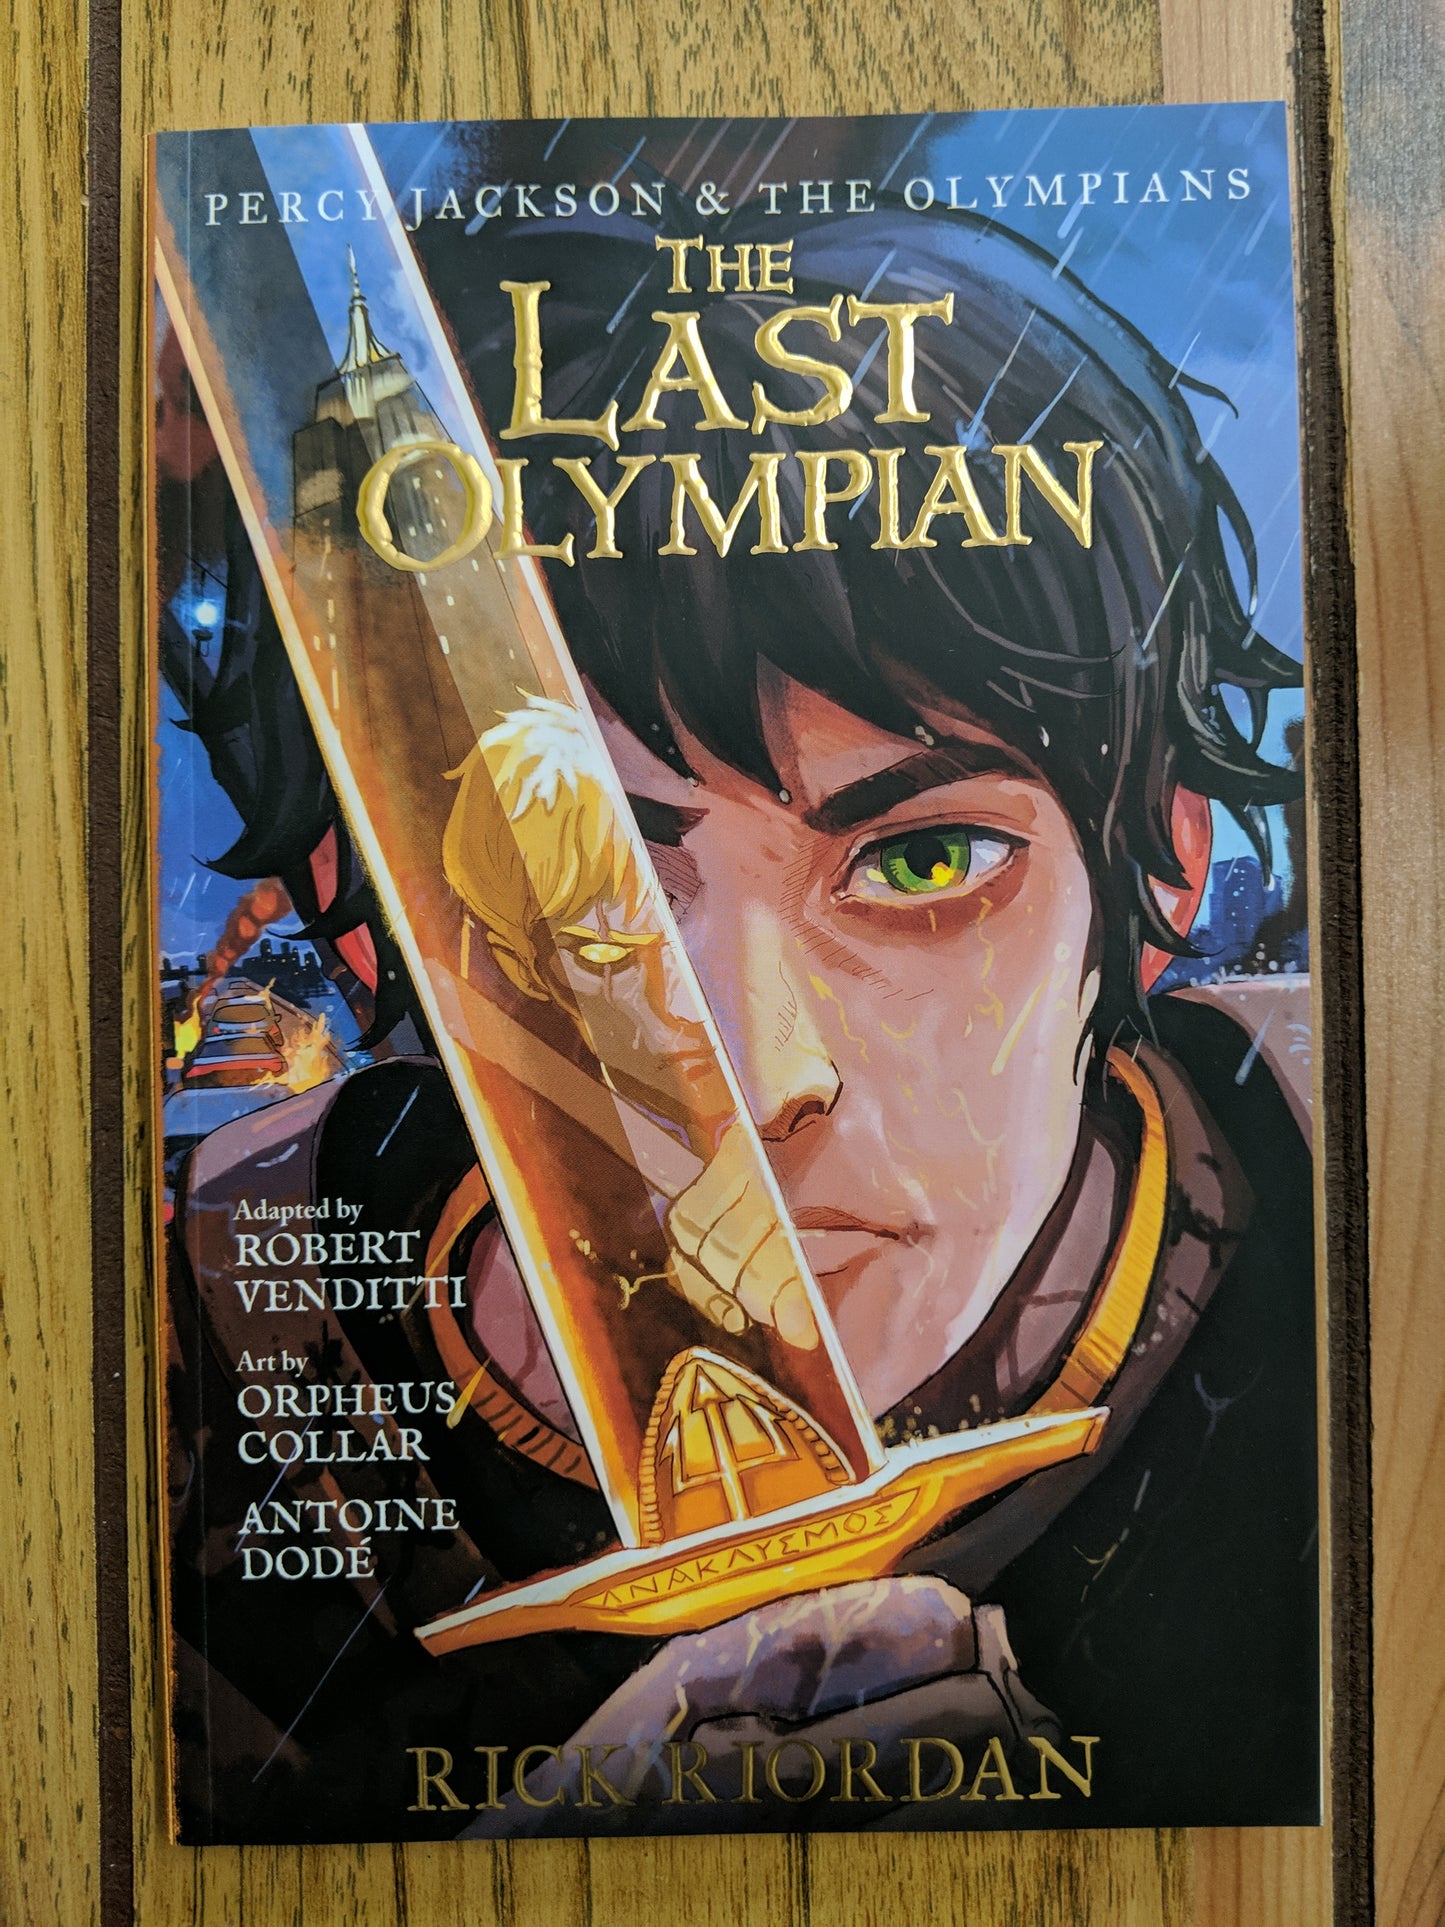 The Last Olympian: The Graphic Novel (Percy Jackson & the Olympians #5)